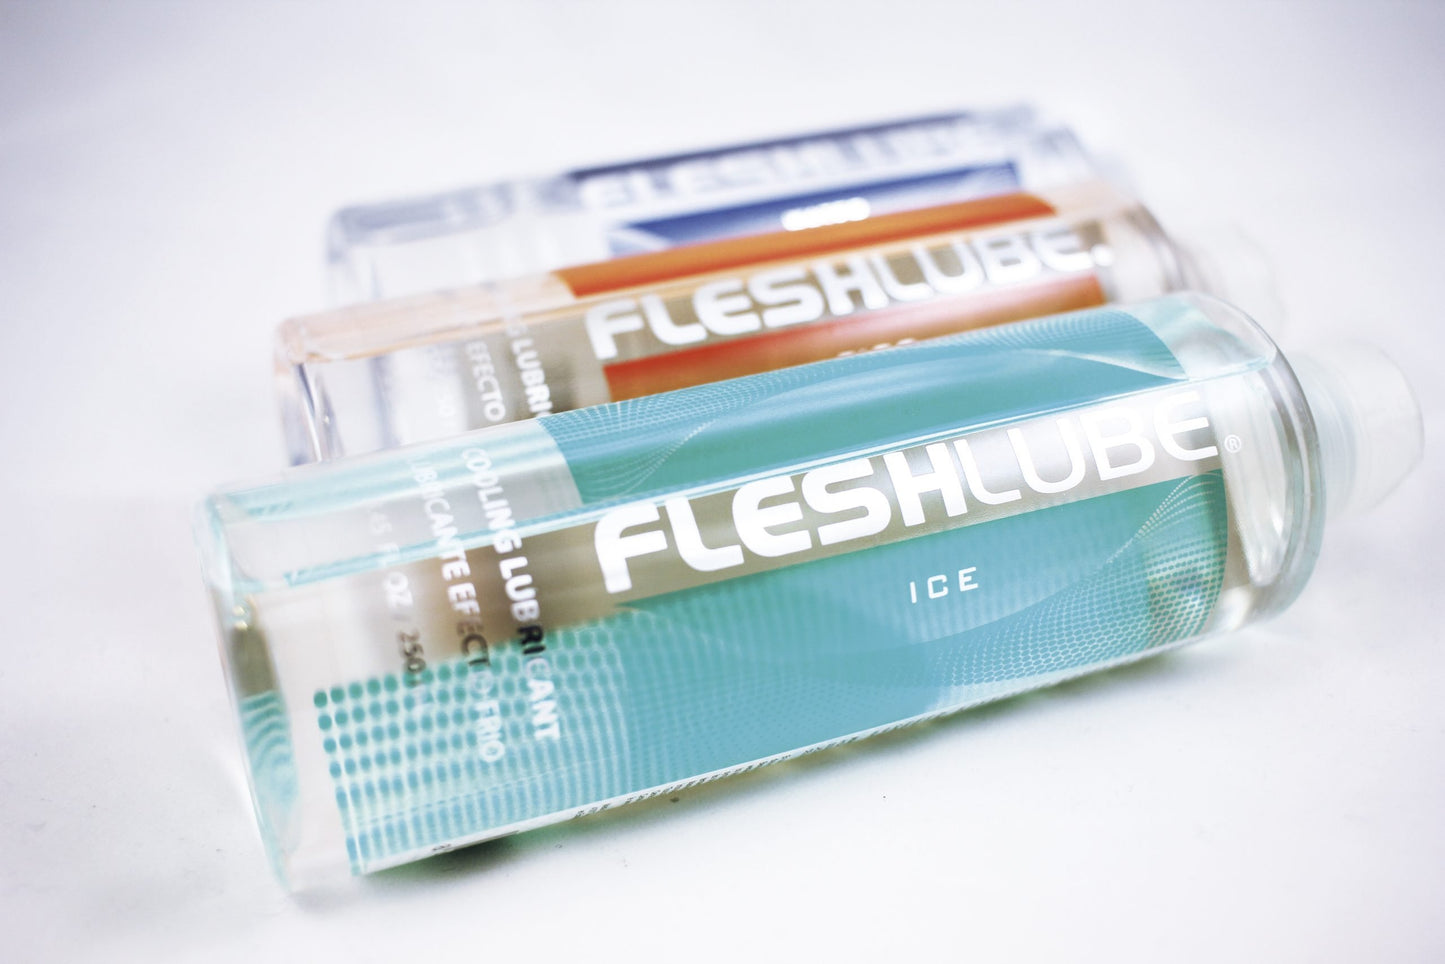 Fleshlube Ice 8 oz (Single)